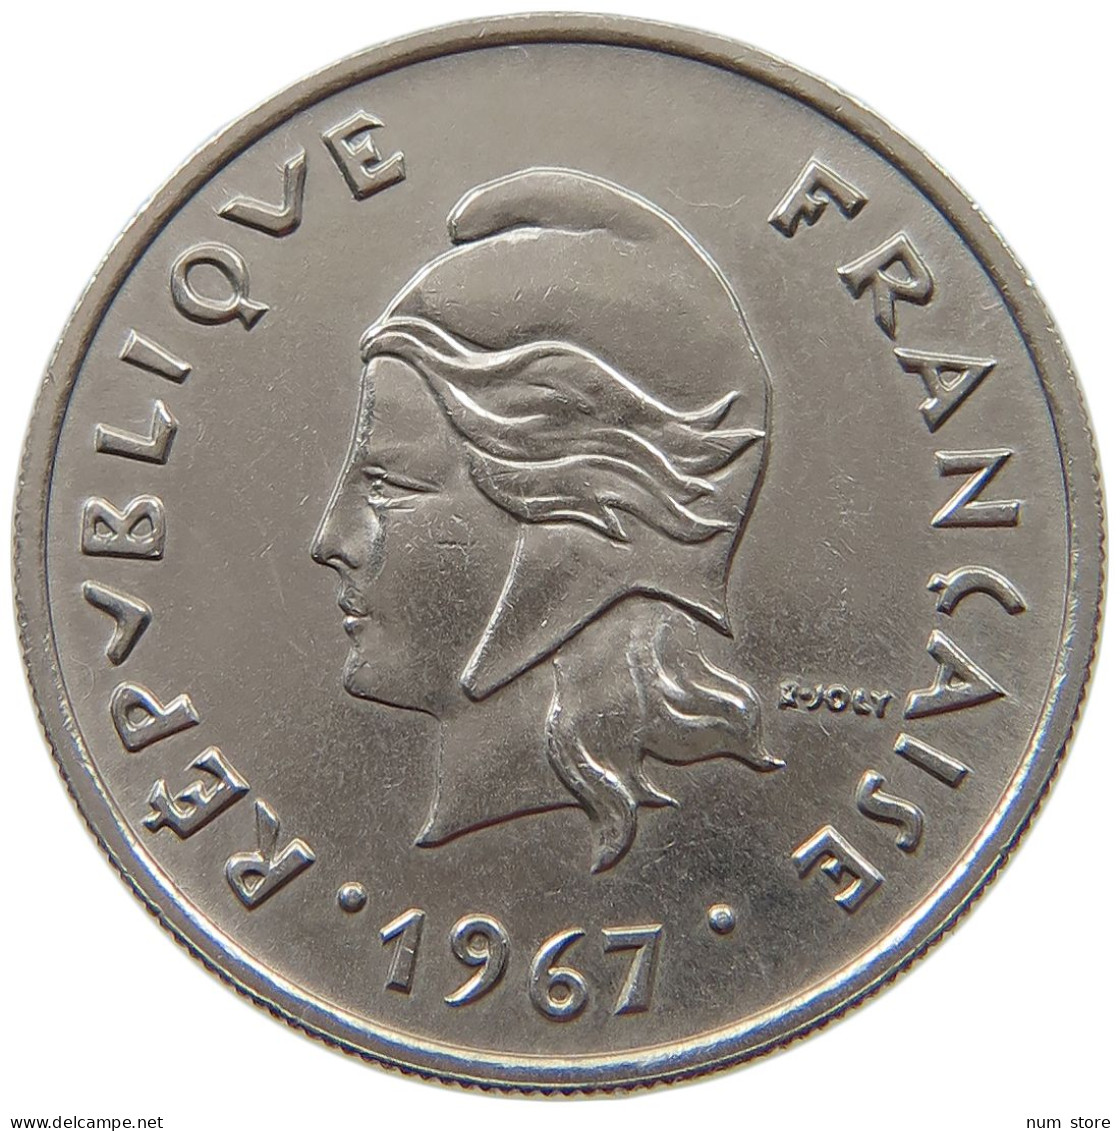 POLYNESIA 10 FRANCS 1967  #a015 0685 - Französisch-Polynesien